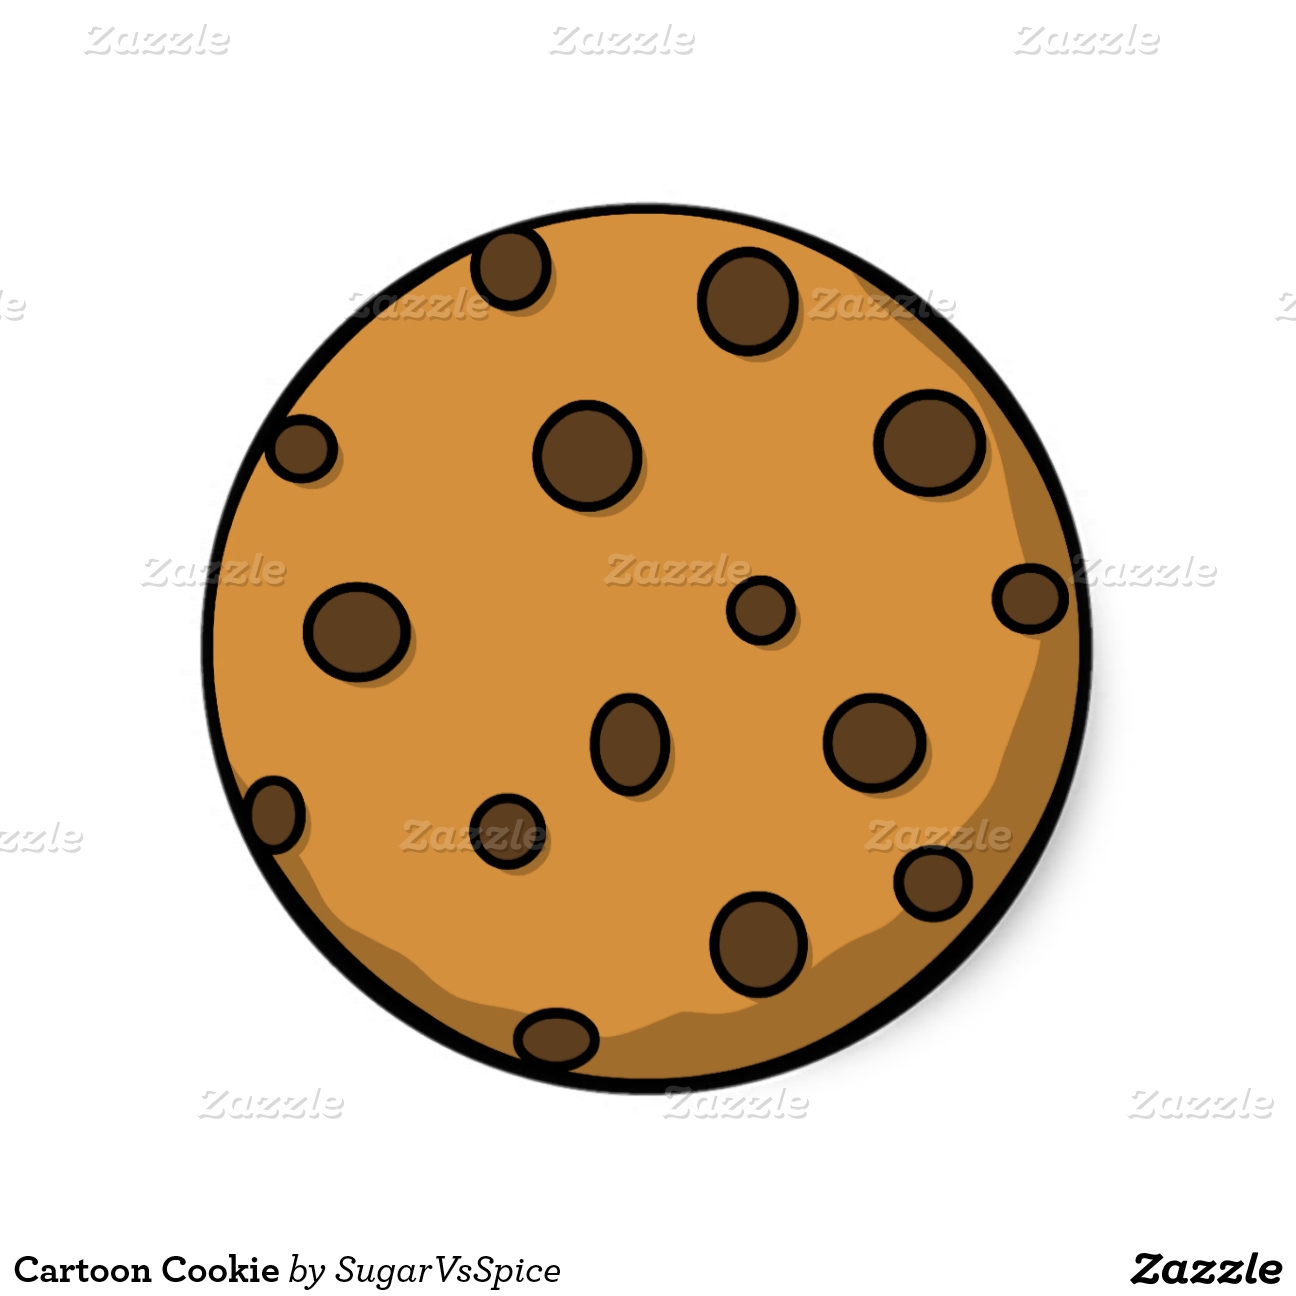 243+ Cartoon Cookie Stickers and Cartoon Cookie Sticker Designs 